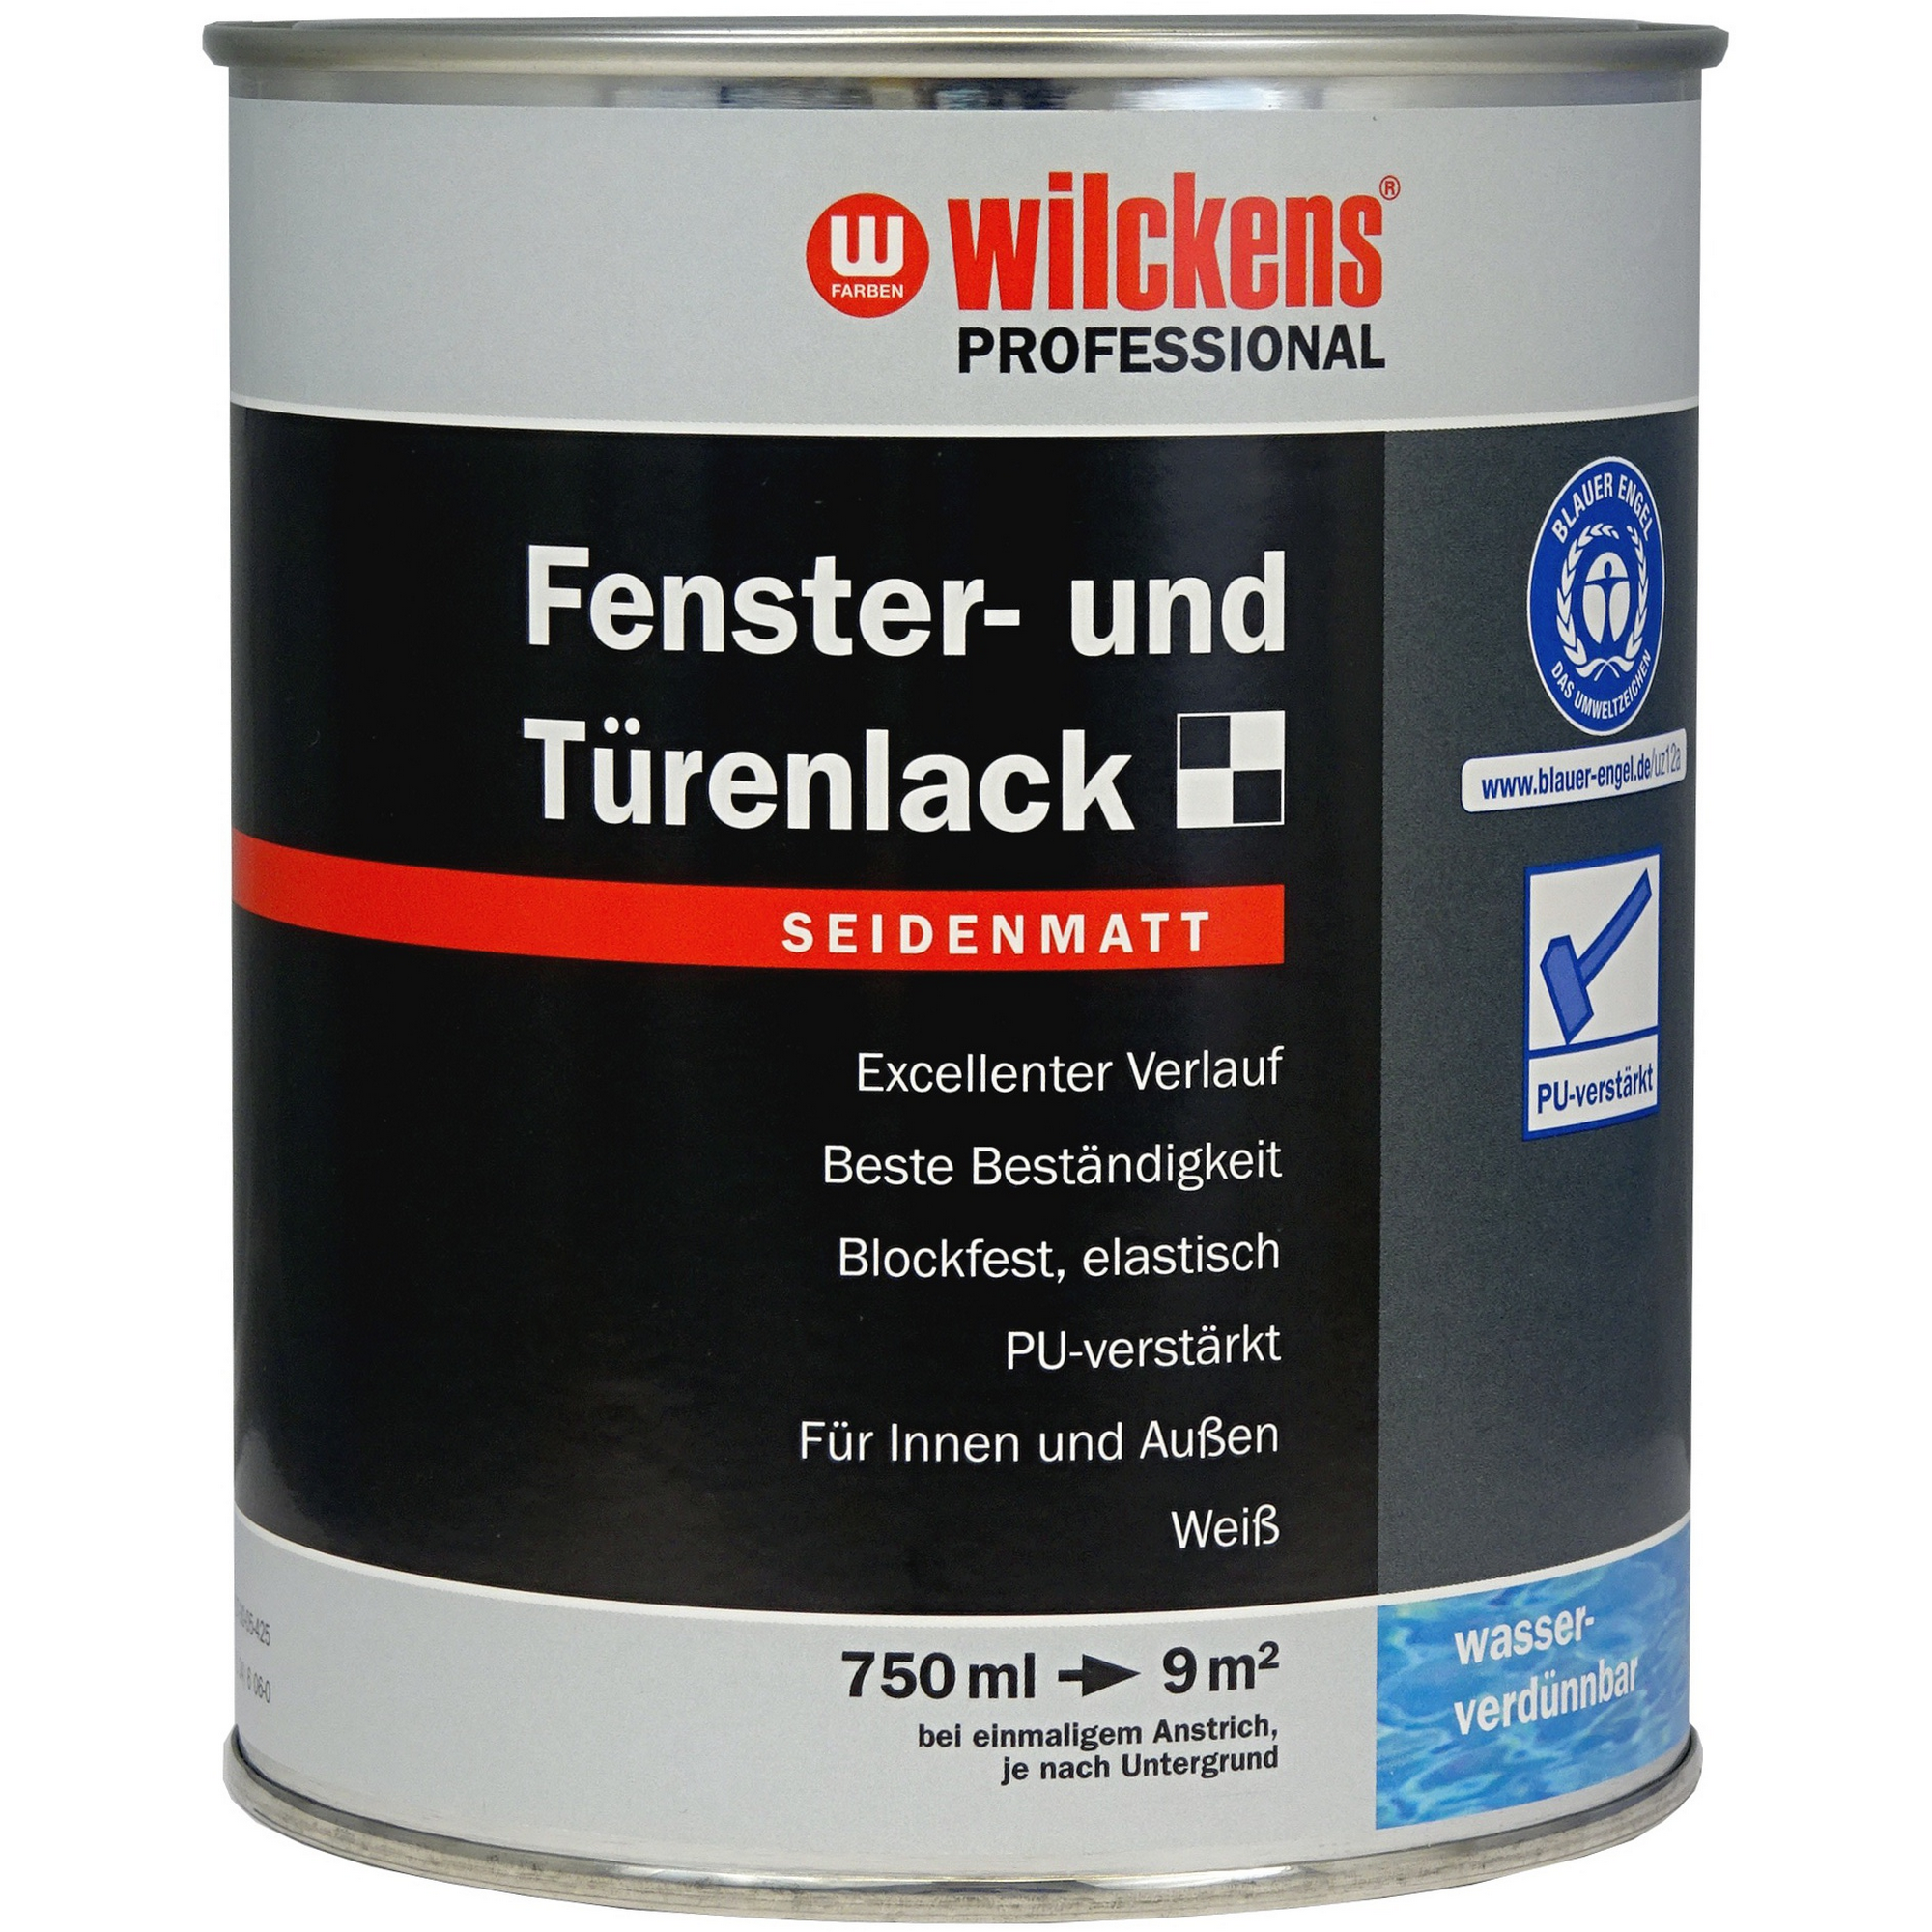 Fenster- & Türenlack 'Professional' weiß seidenmatt 750 ml + product picture